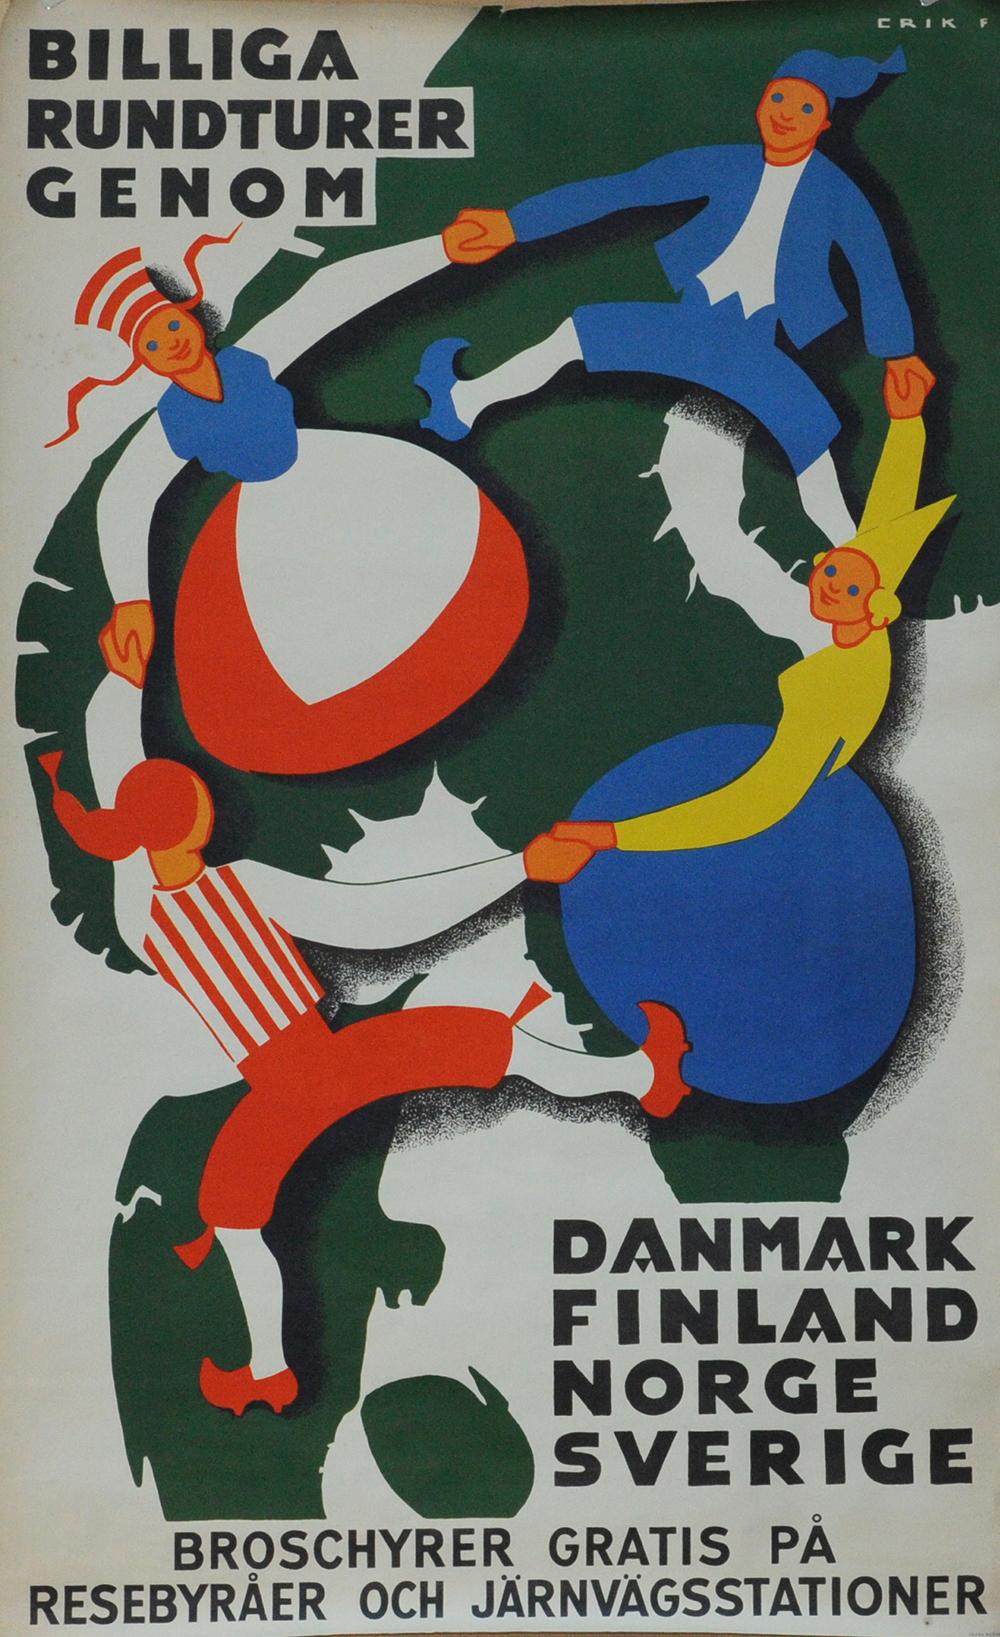 Poster - Danish Railways 'Billiga Rundturer Genom - Danmark Finland Norge Sverige' by Erik F circa